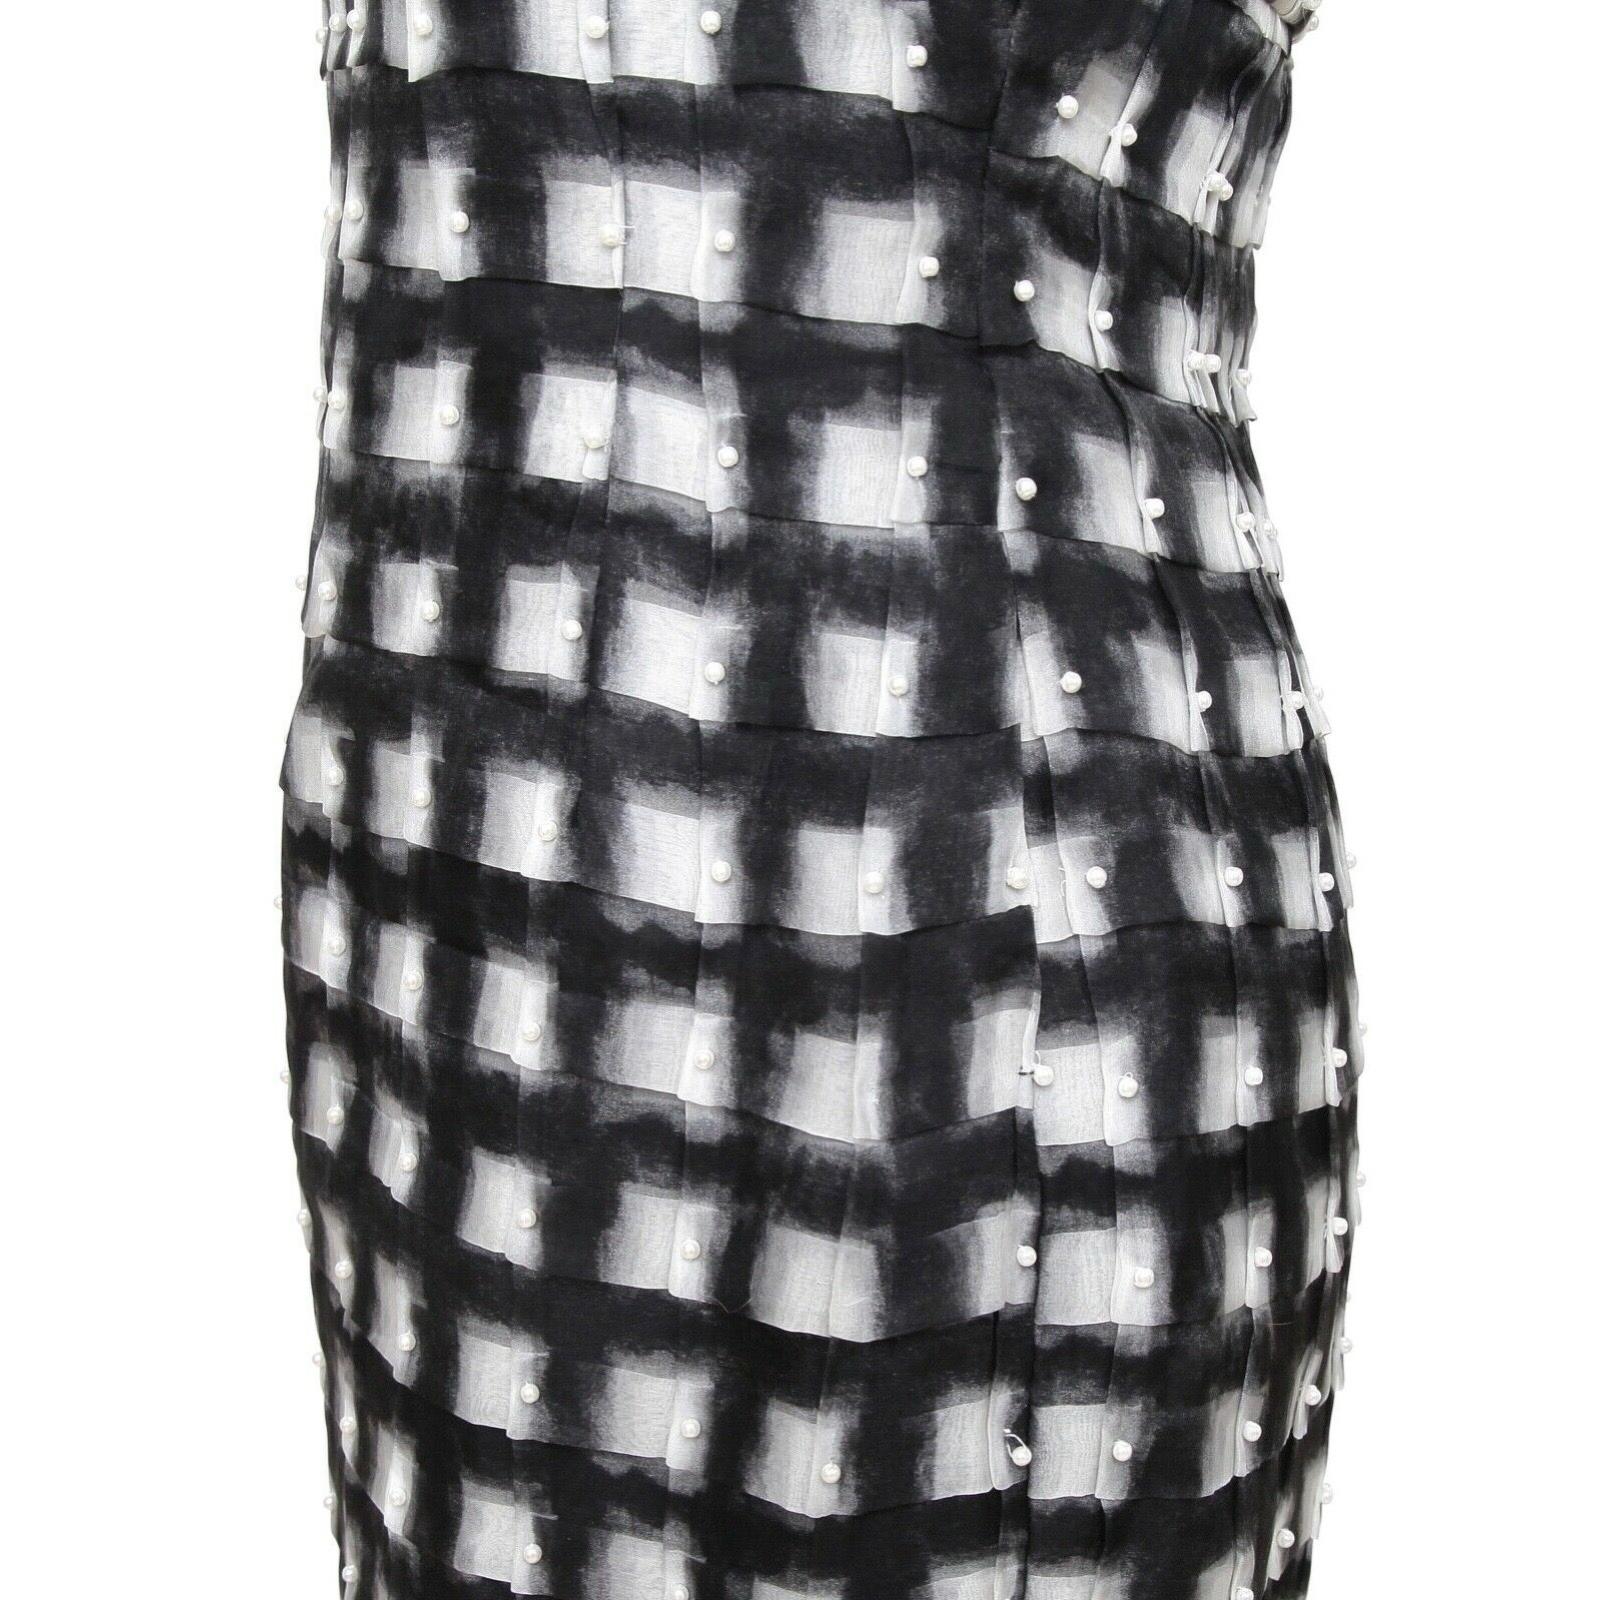 CHANEL Strapless Dress Pearls Black Checkered White RUNWAY 2013 Sz 38 1